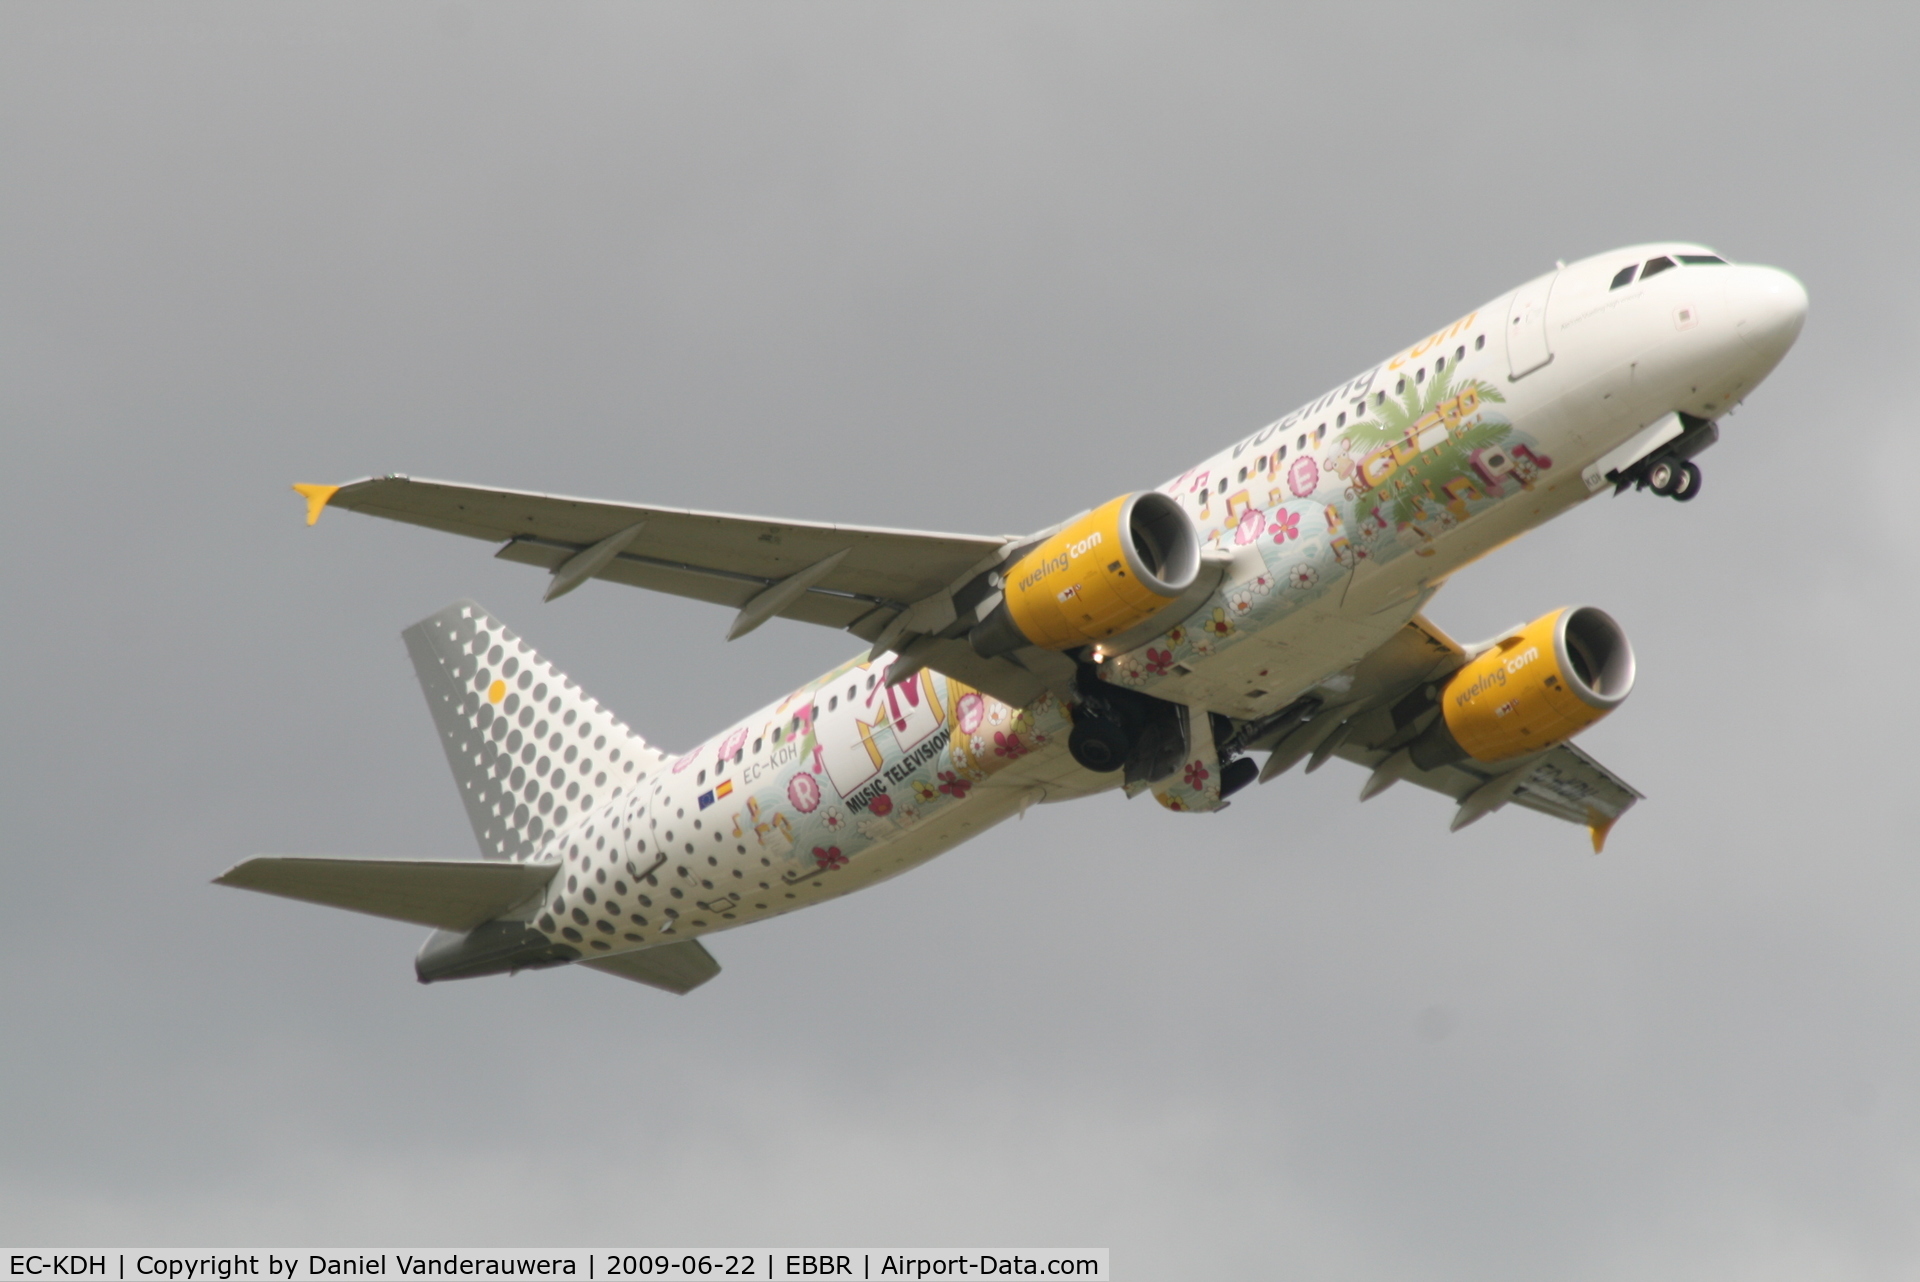 EC-KDH, 2007 Airbus A320-214 C/N 3083, Taking off from RWY 07R